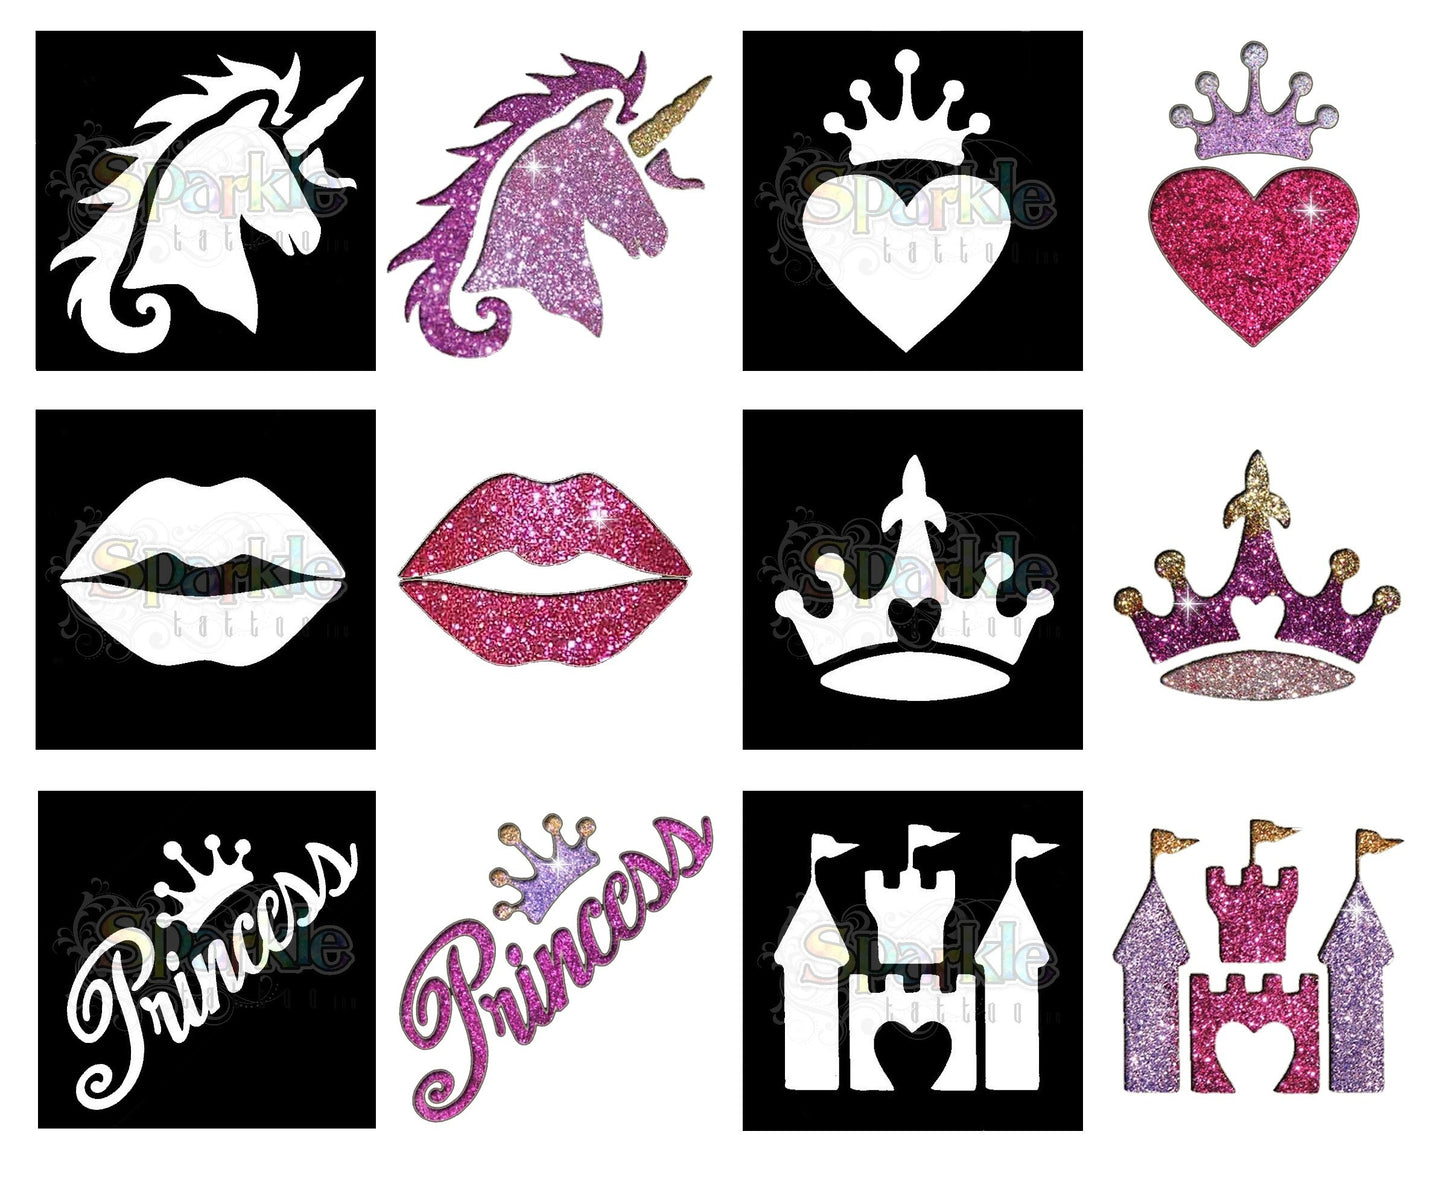 Tattoo Stencils - Princess Collection